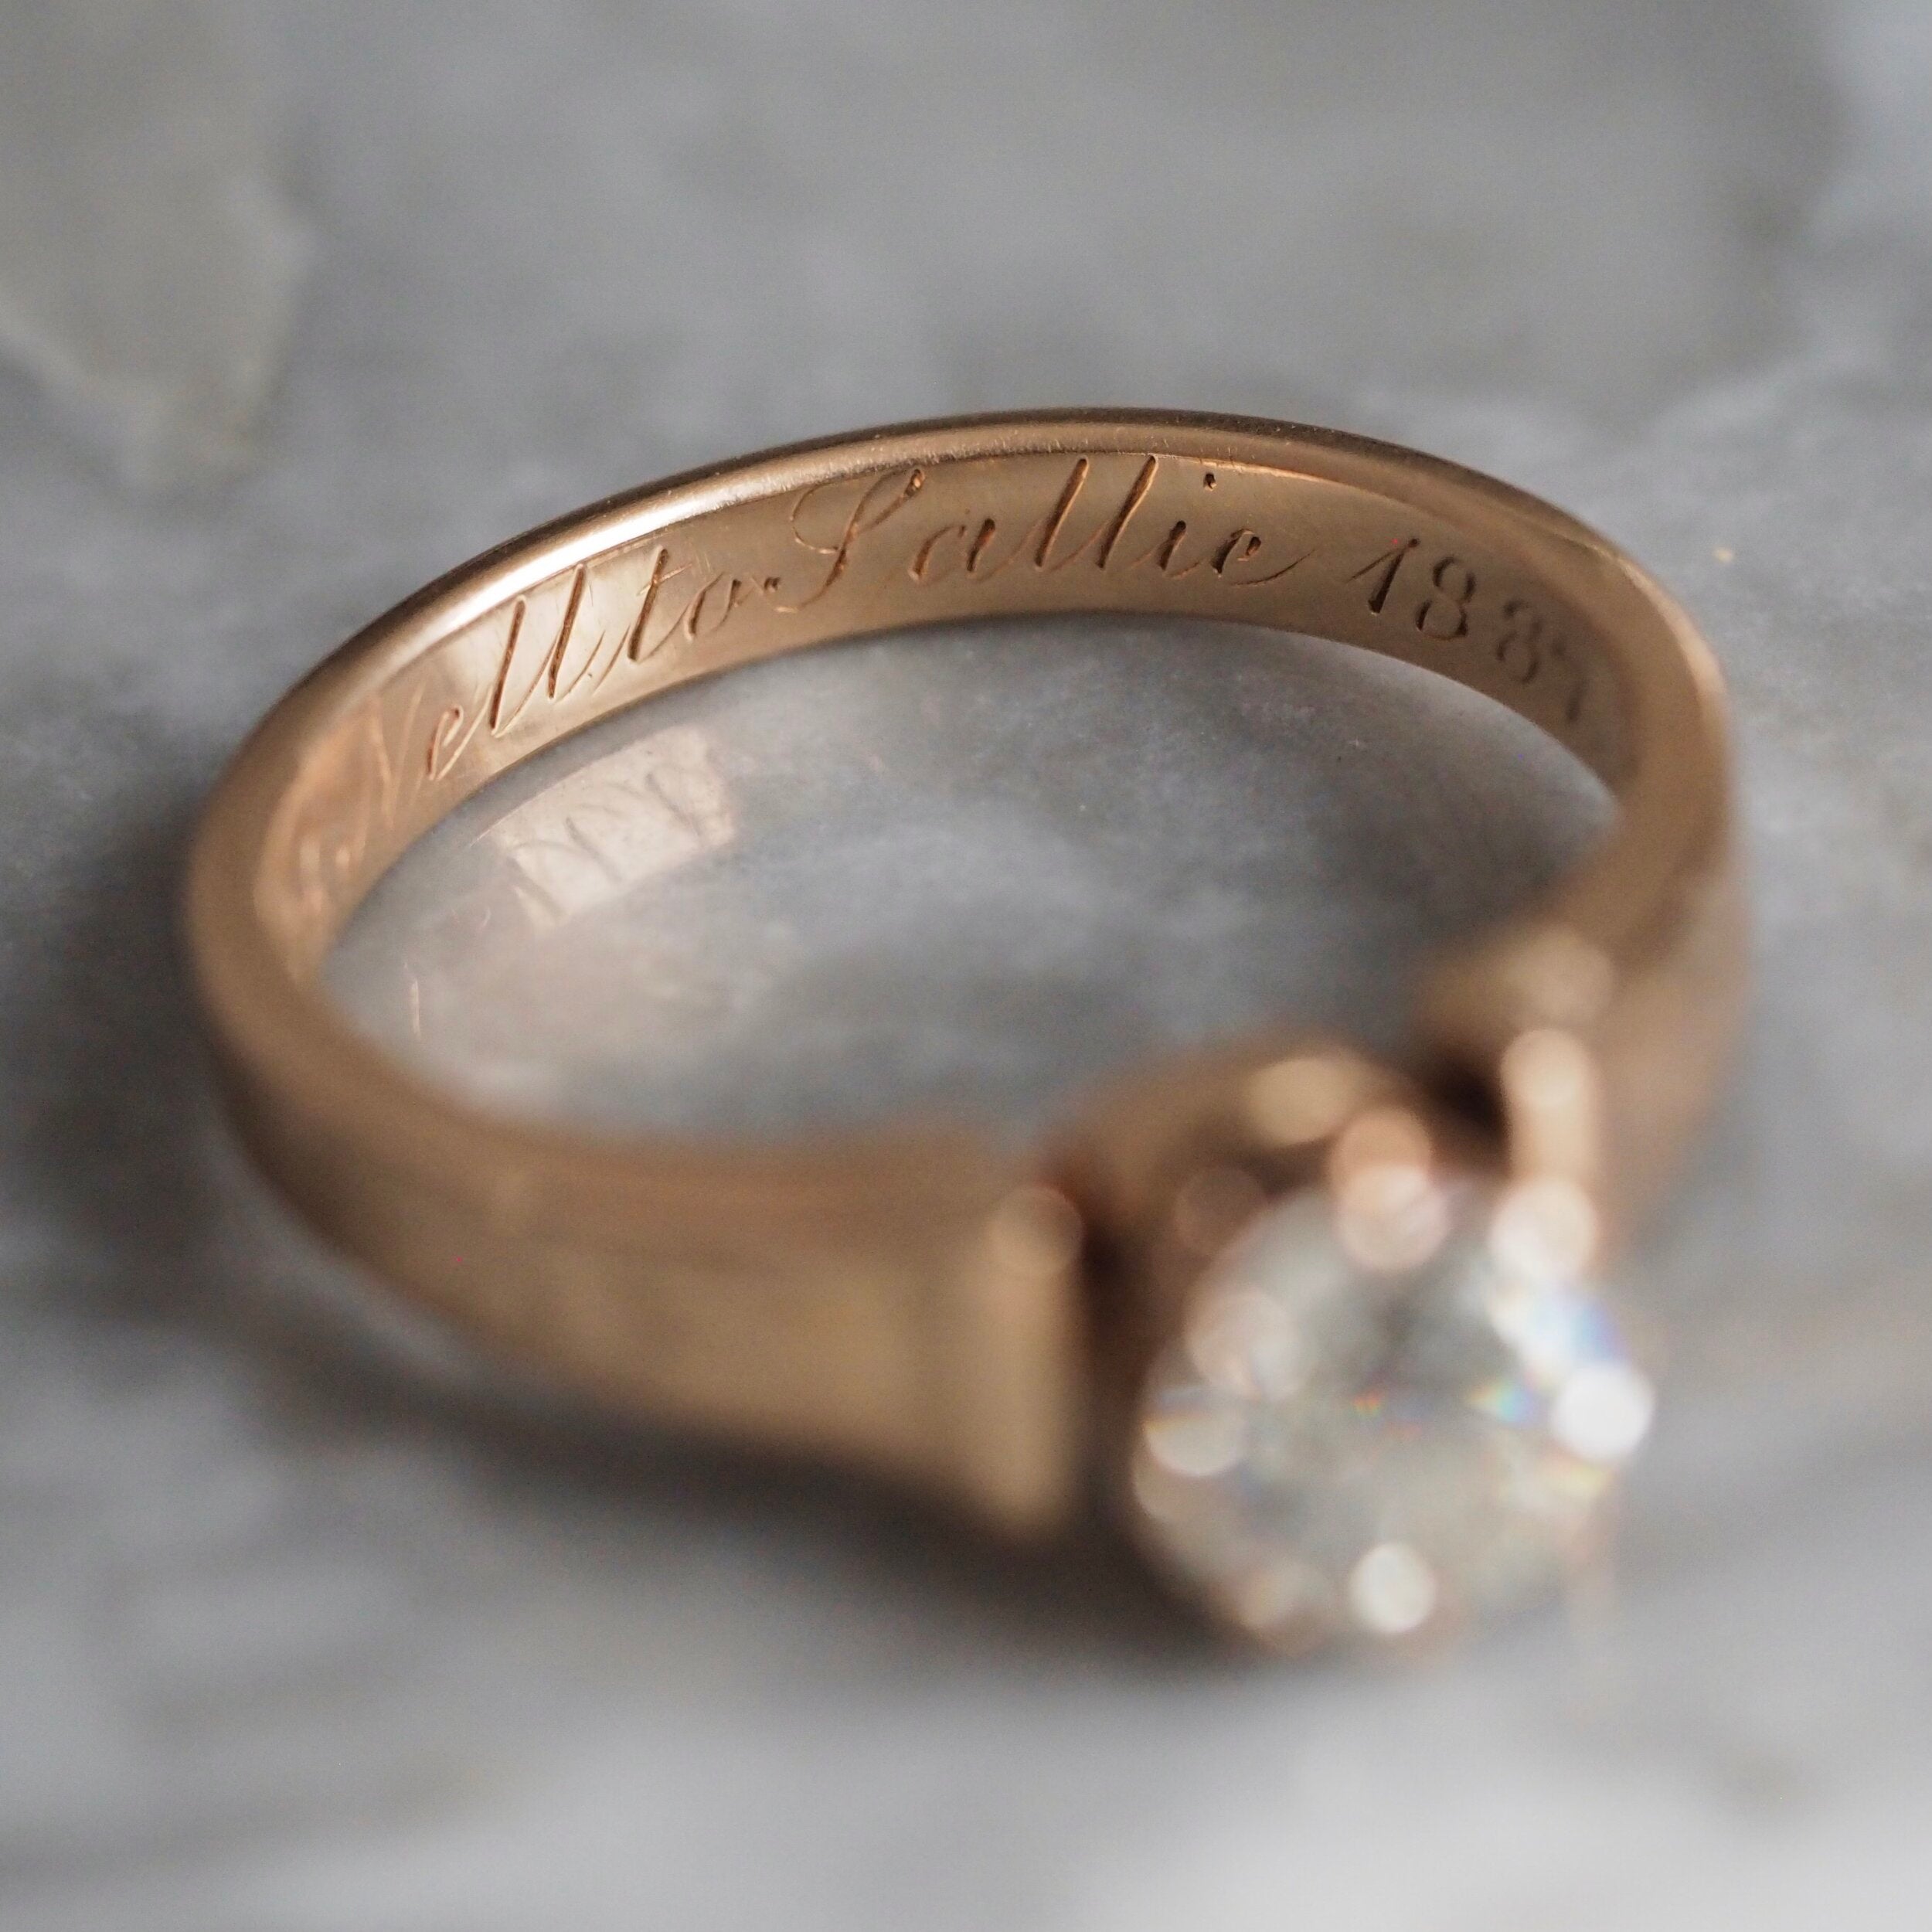 Antique c. 1886 14k Gold Old Mine Cut Diamond Ring